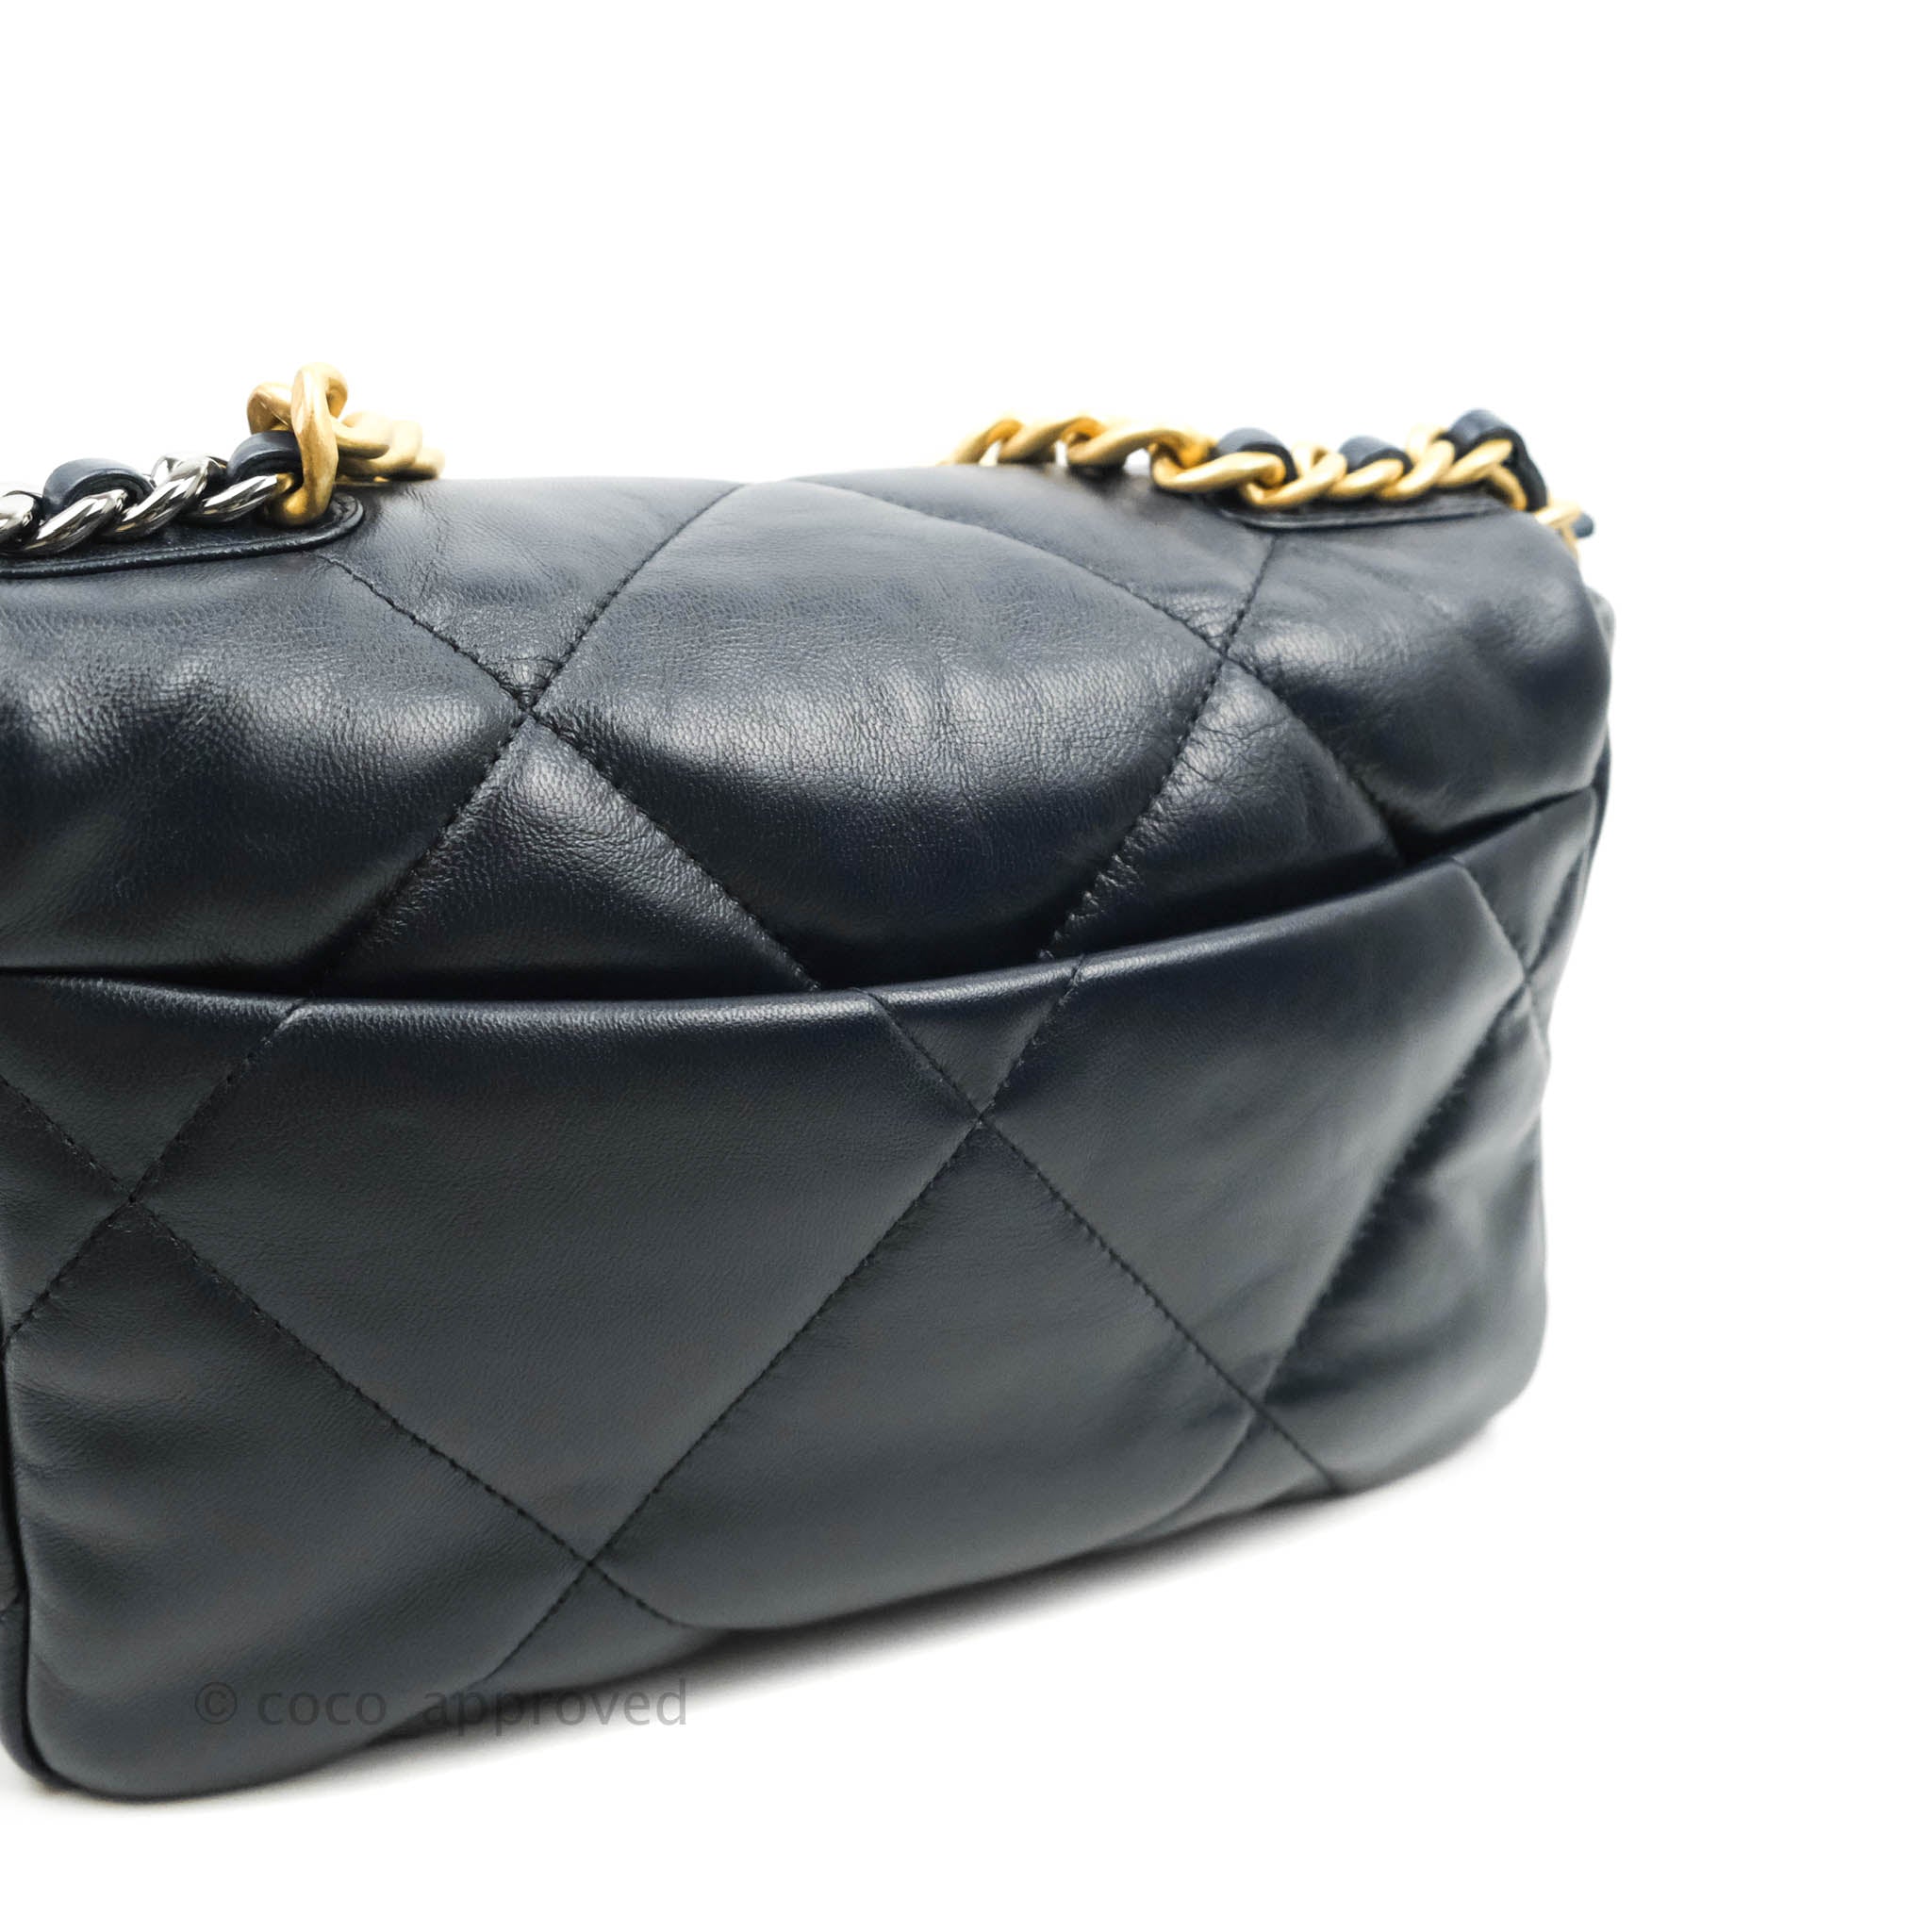 Chanel 19 Small, White Leather with Black/Dark Blue Hardware, New in Box  WA001